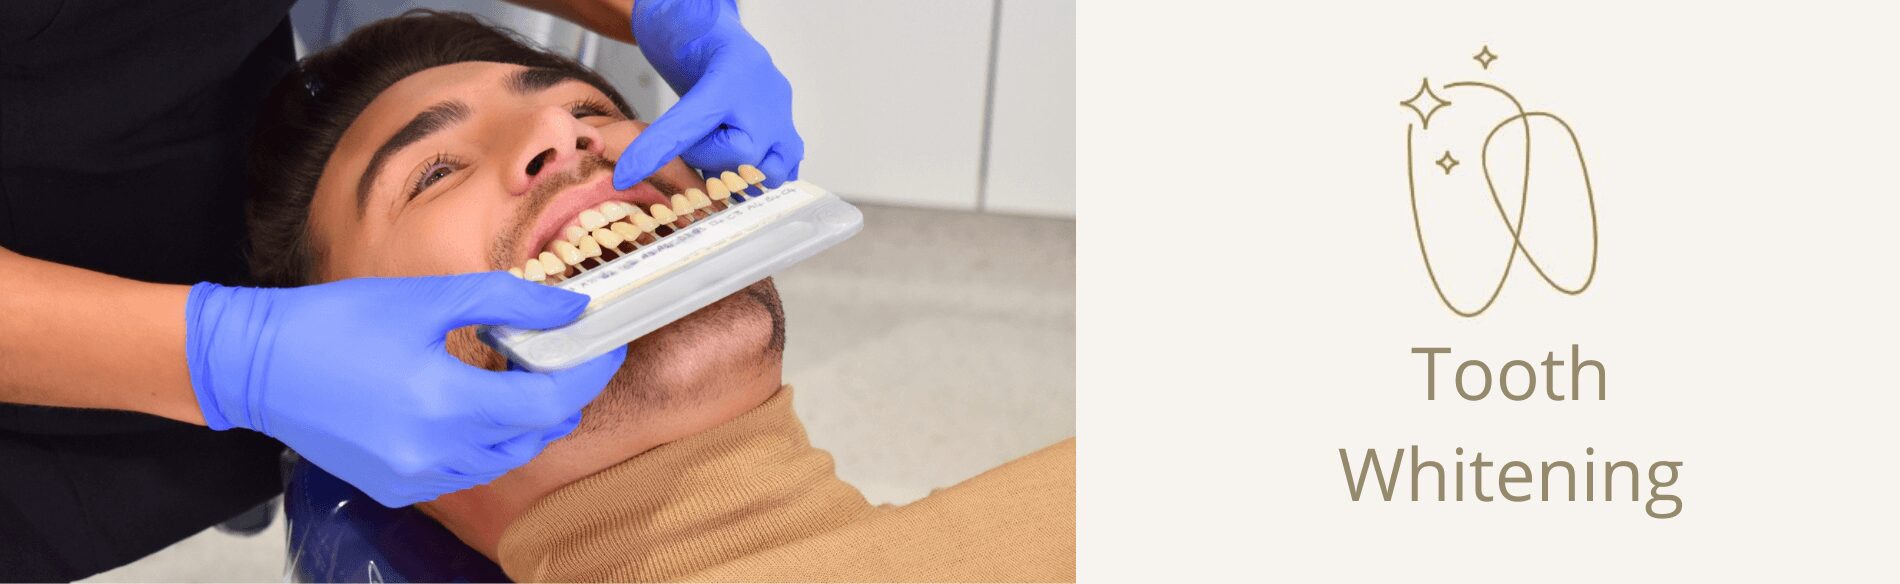 Patient having tooth whitening treatment at Kiln Lane Dental